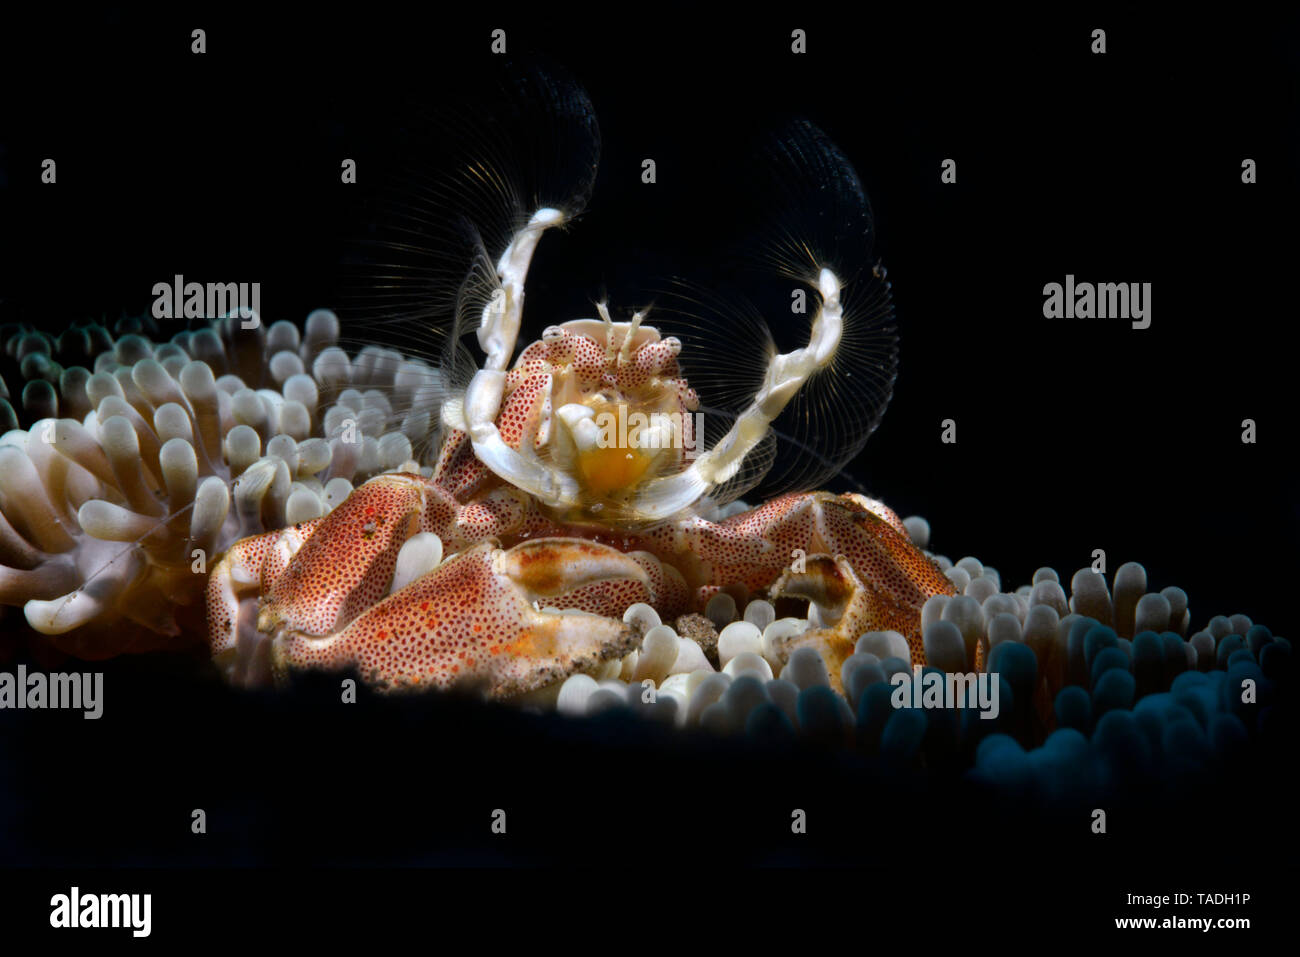 Anemob+ne crab, porcelain crab on a sea anemone Stock Photo